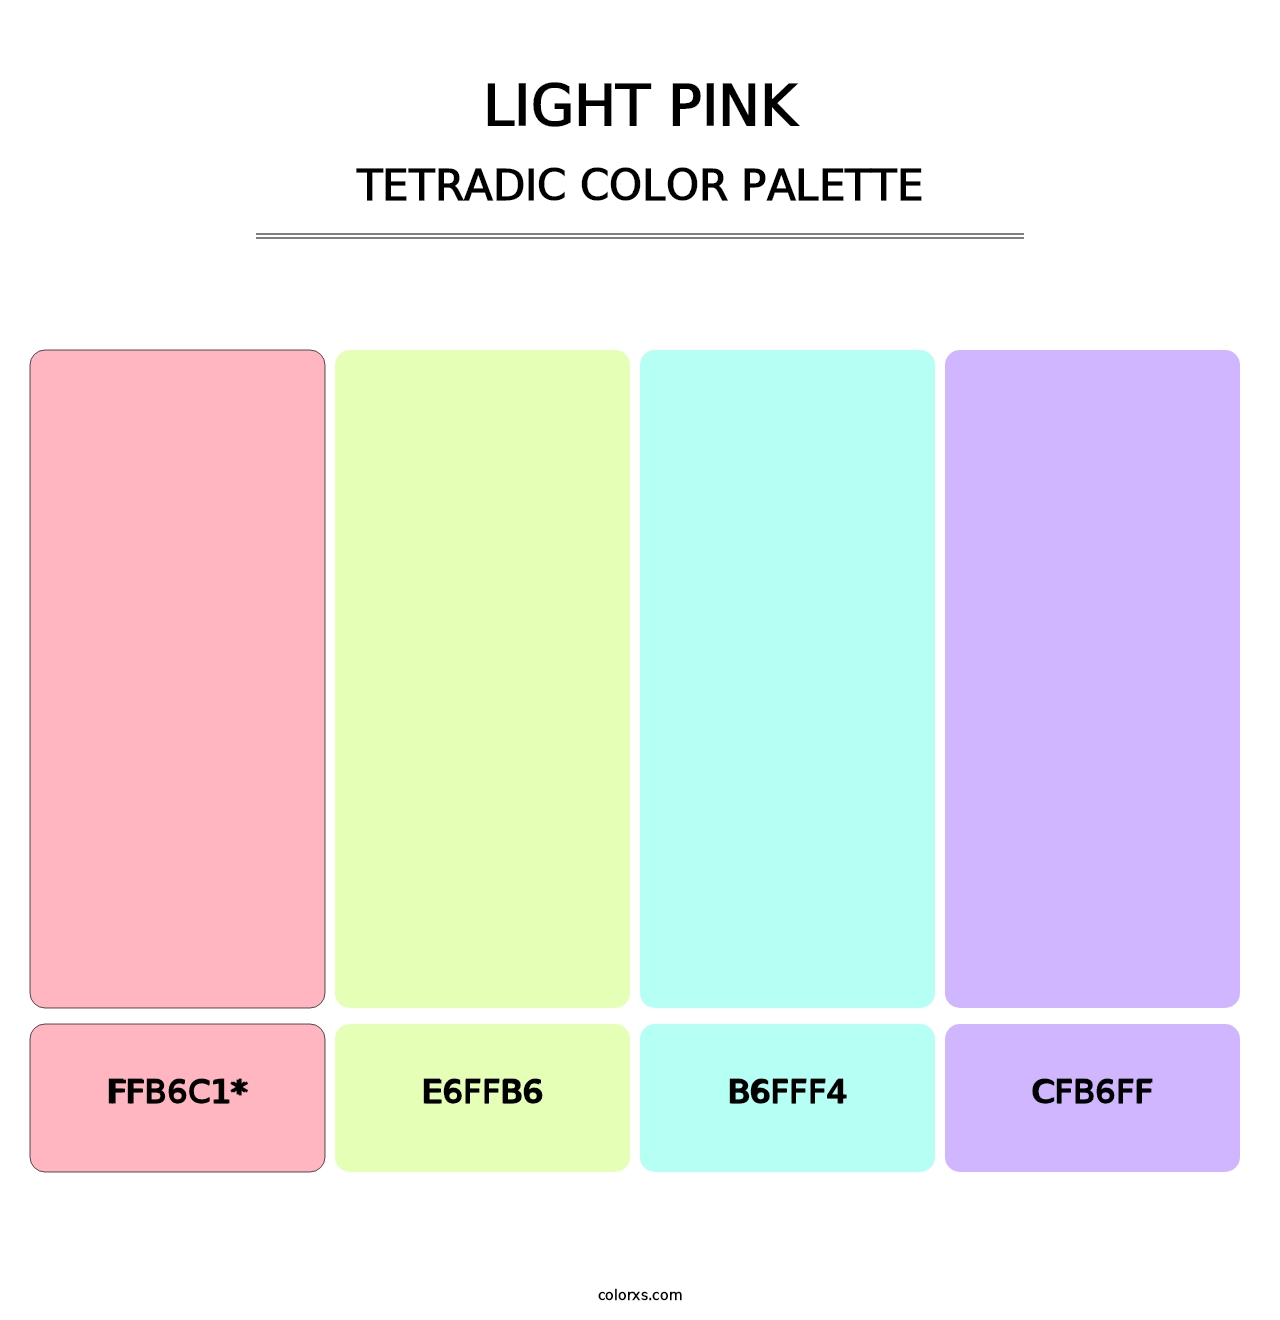 Light Pink - Tetradic Color Palette